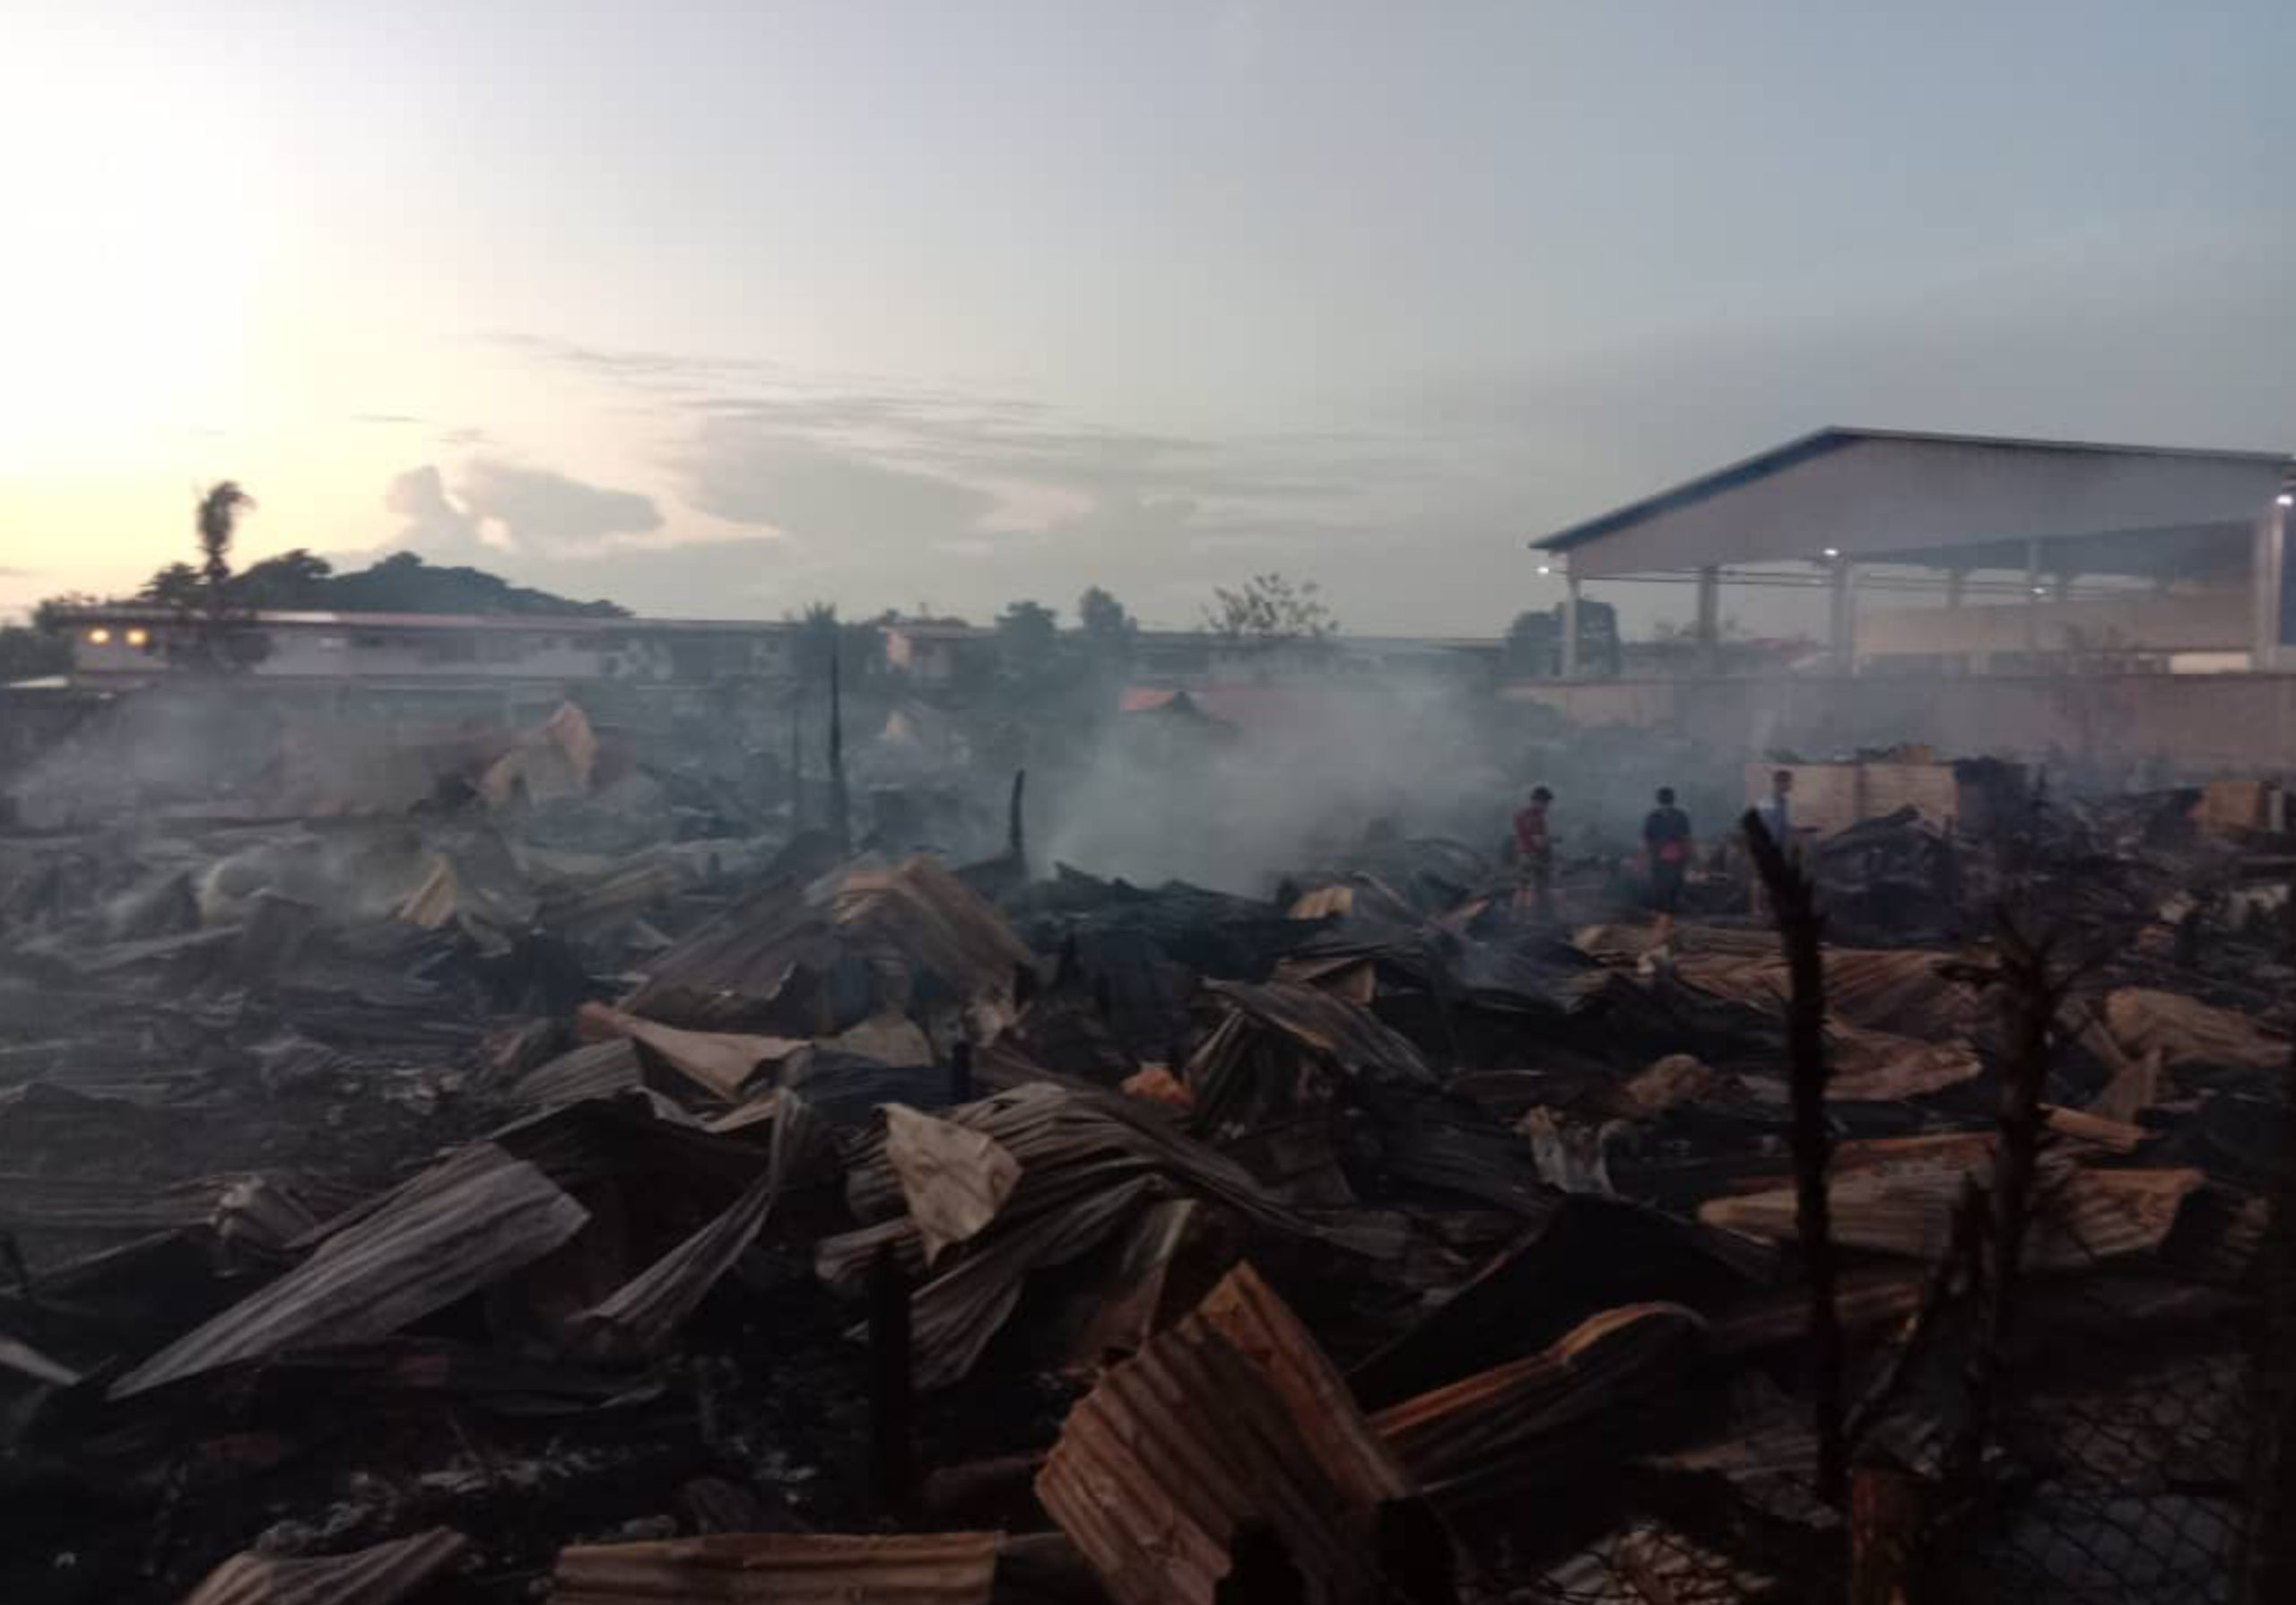 Kebakaran rumah setinggan di Jalan Apas Batu 2 1/2 - Kg Sg Buaya dekat sini awal pagi tadi. (9 Jan)